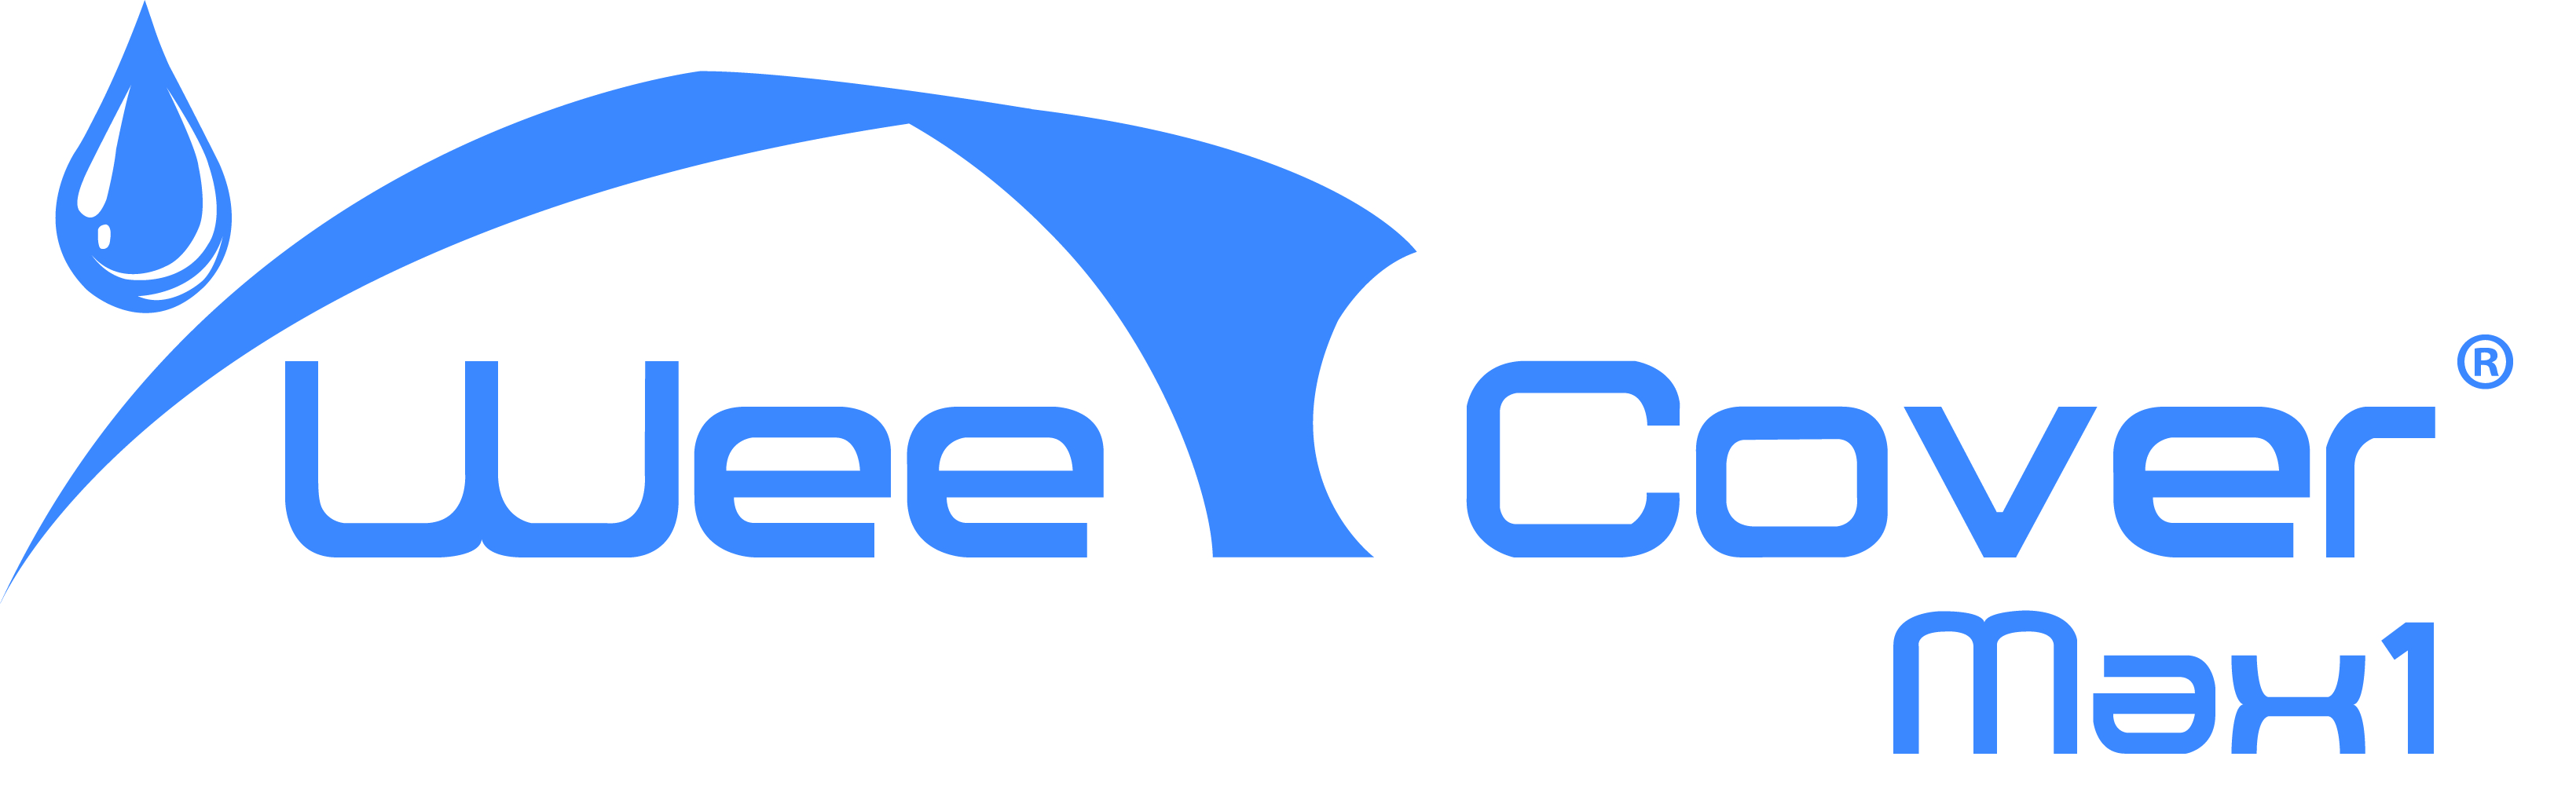 weecover logo